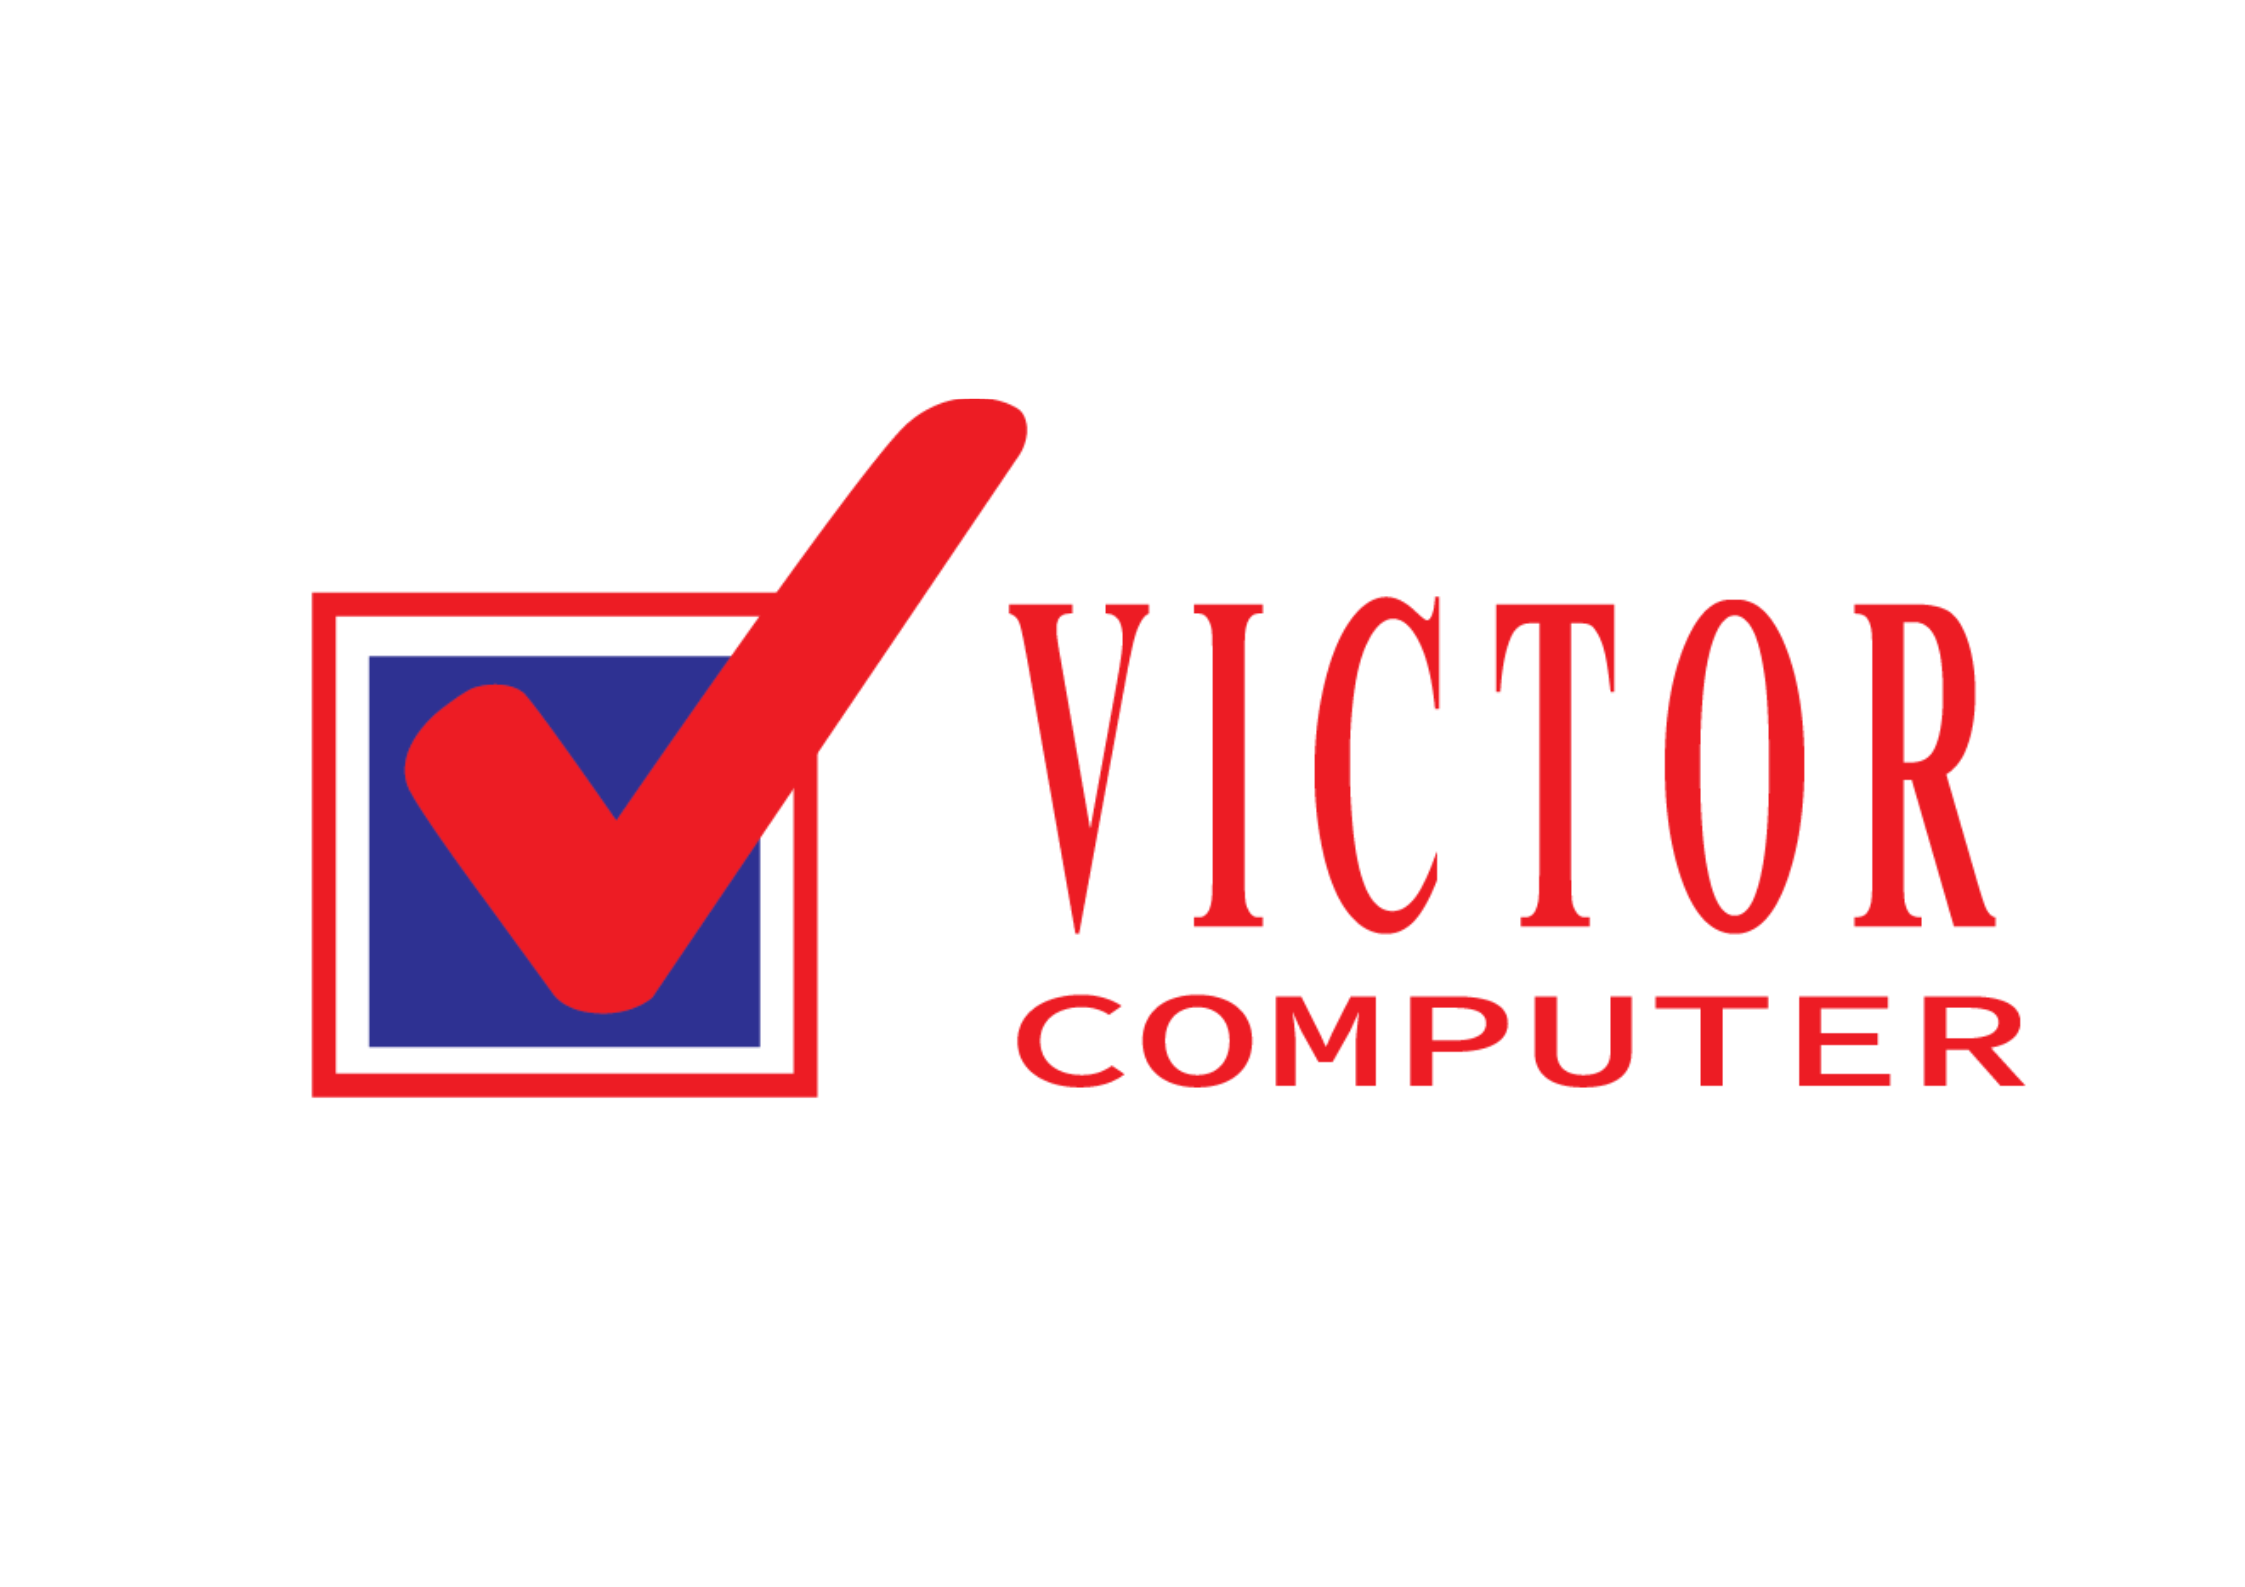 VICTOR COMPUTER